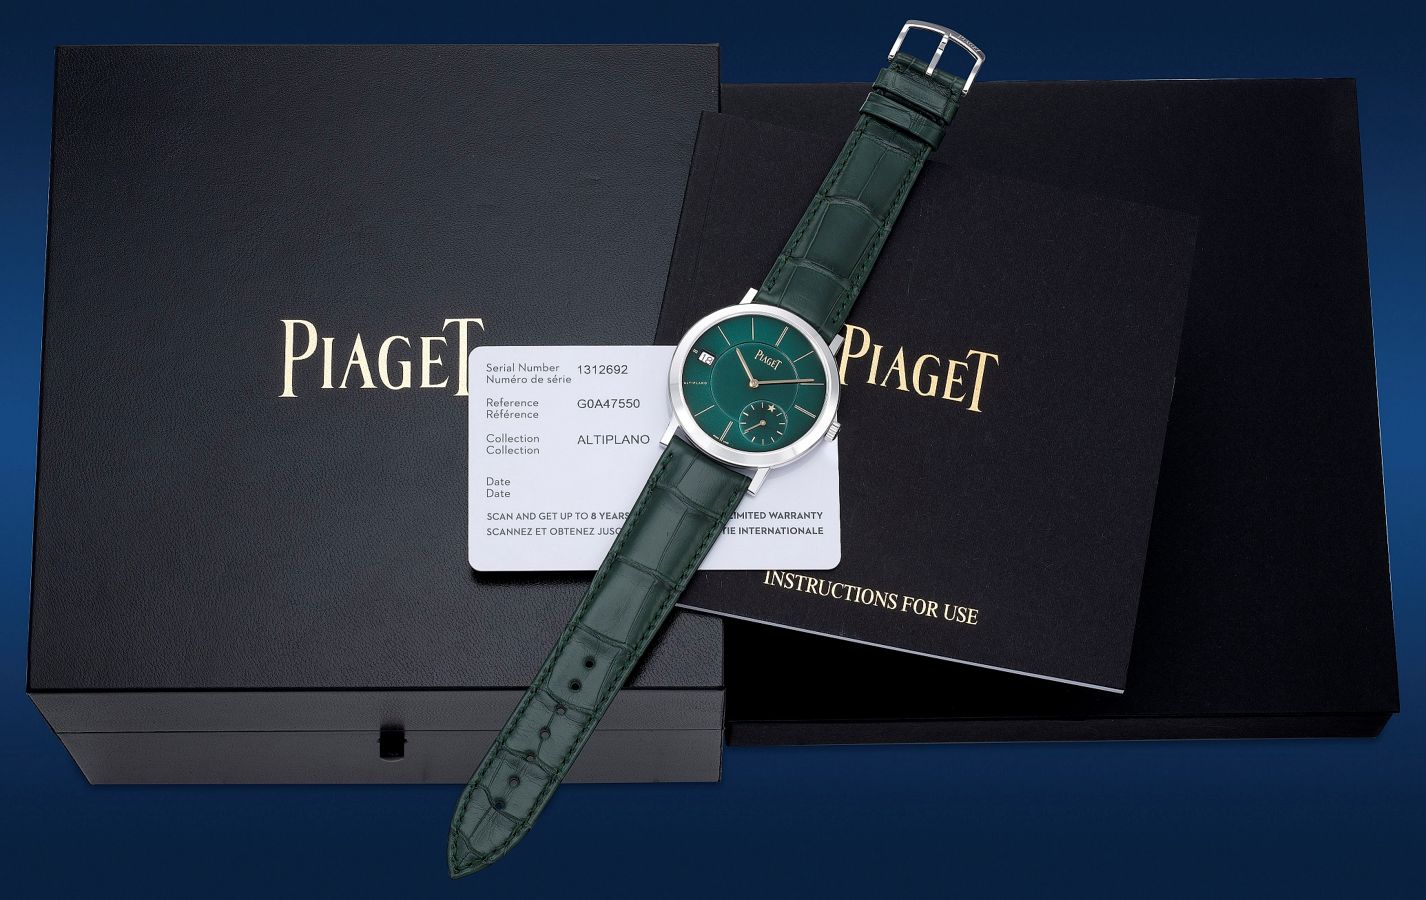 Piaget x Phillips Altiplano Origin China Limited Edition